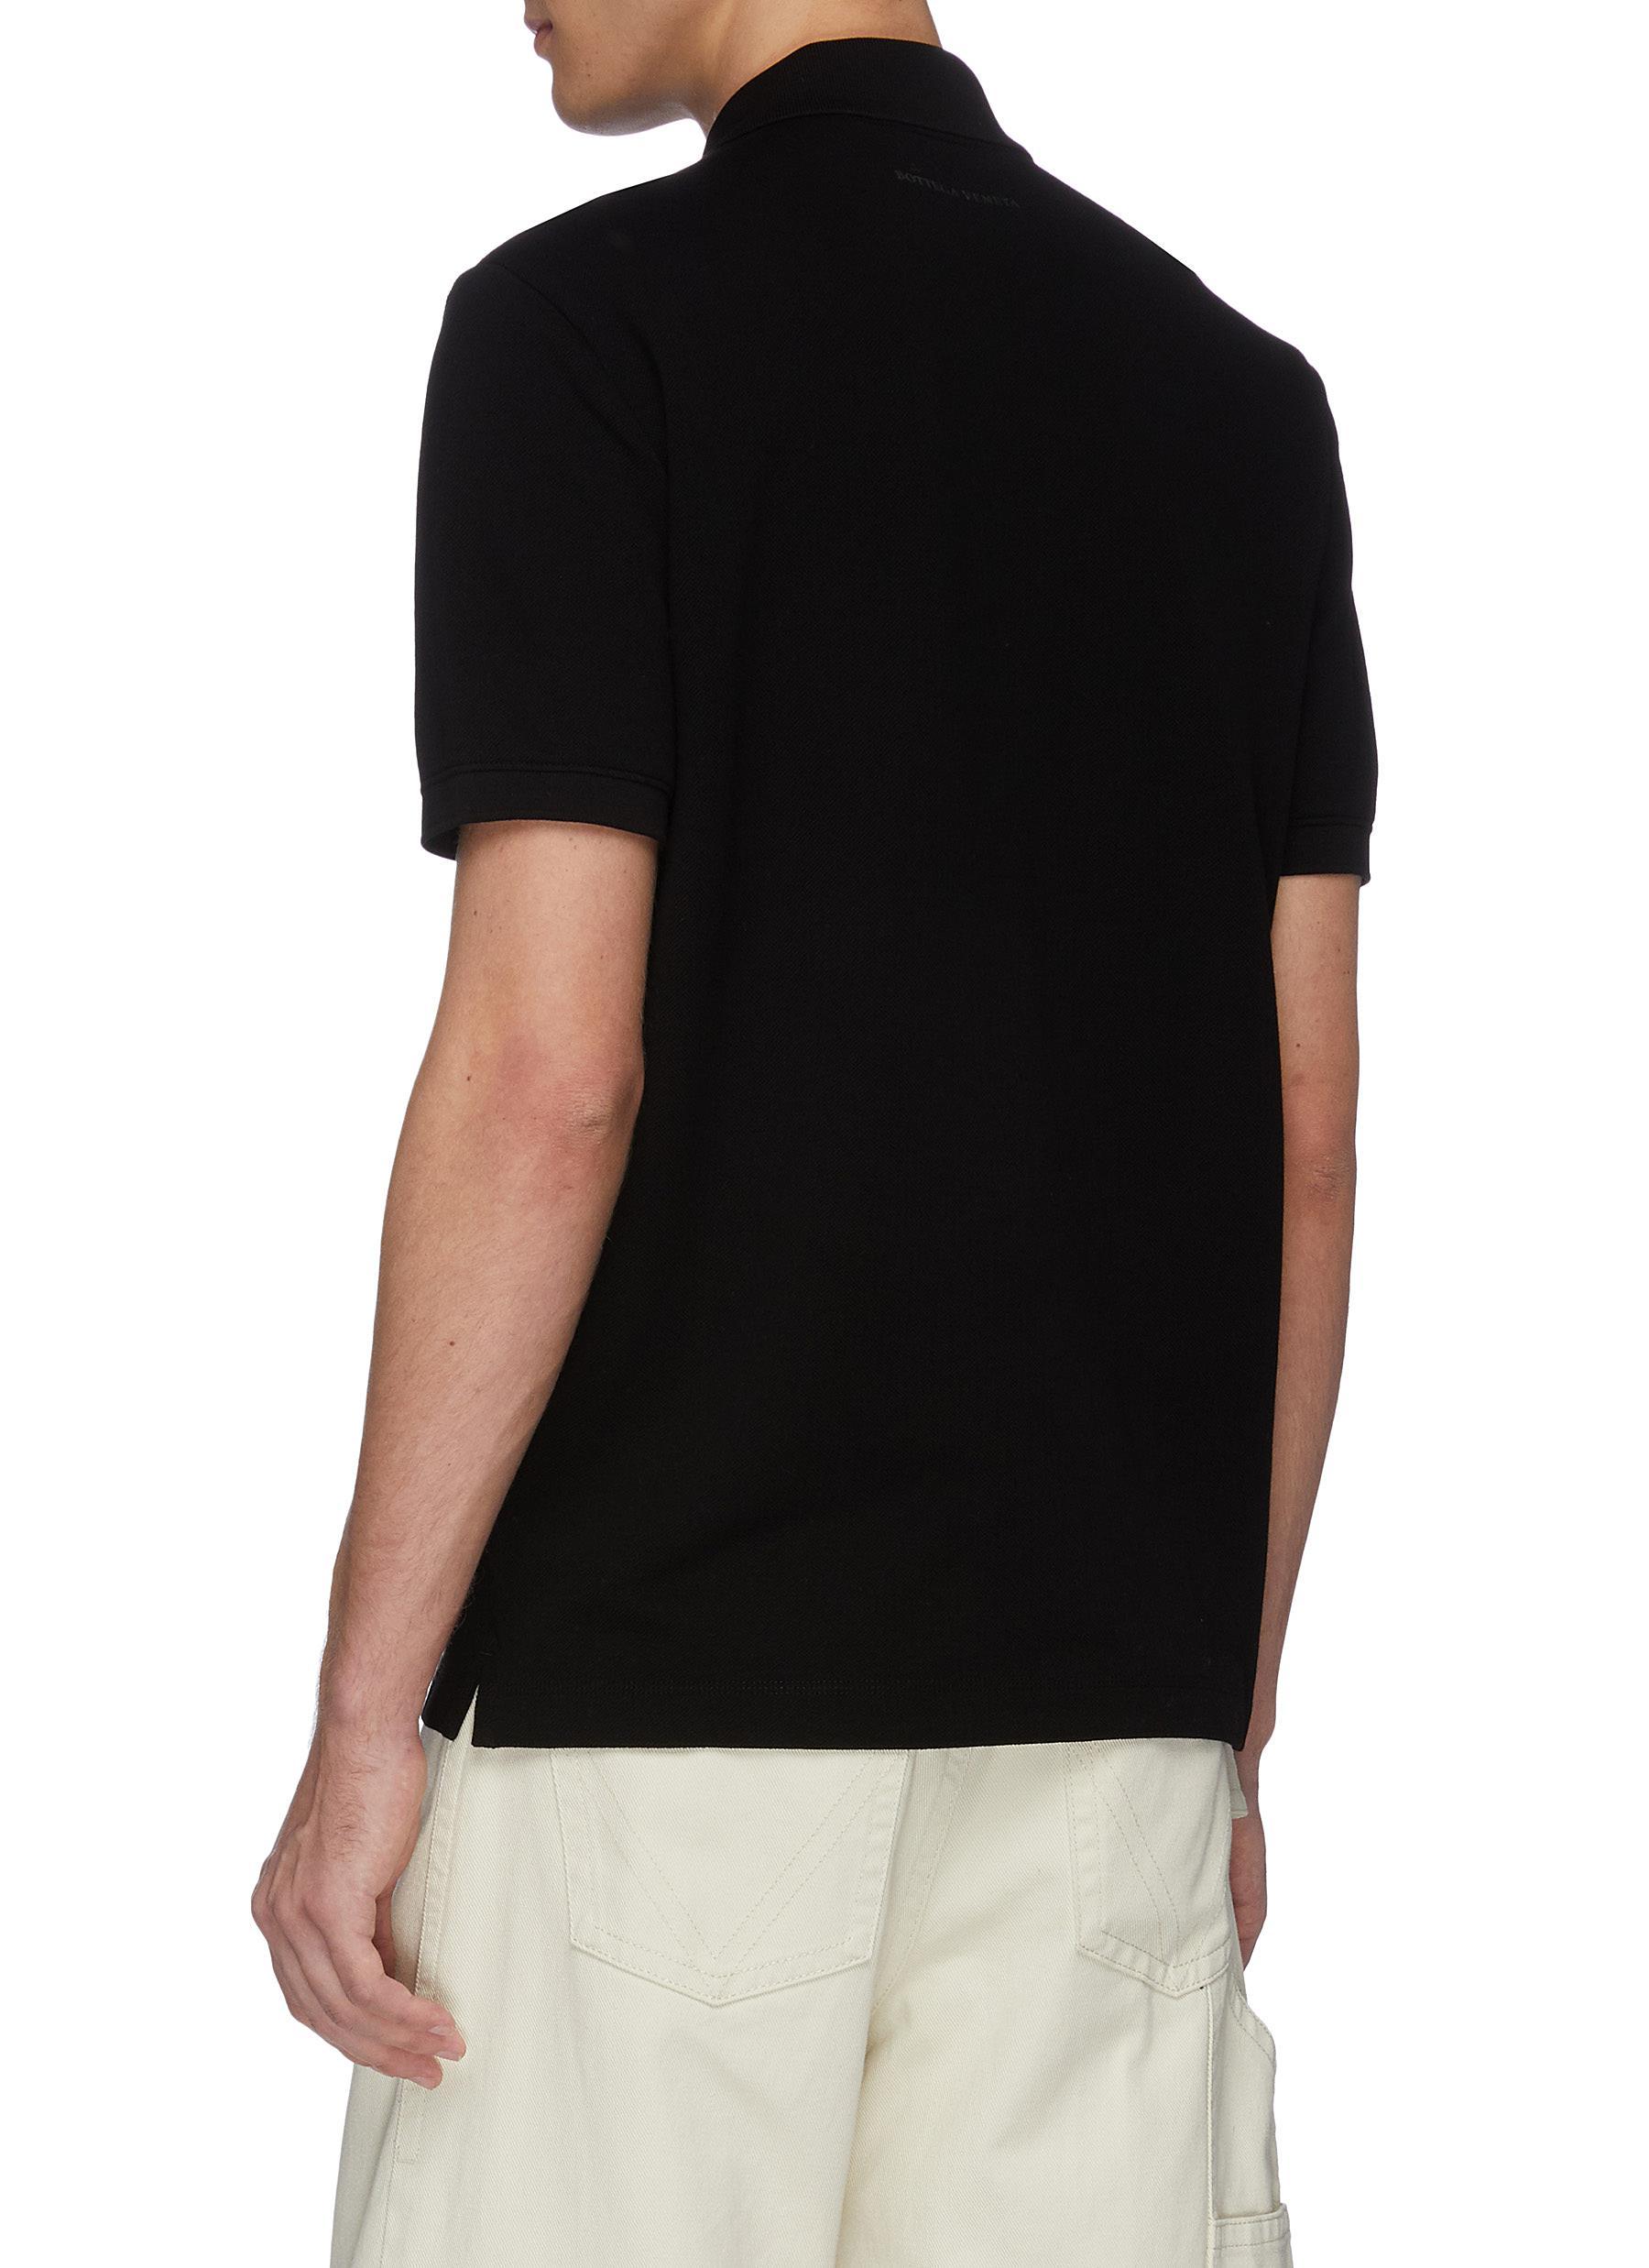 Bottega Veneta Cotton Triangle Fold Polo Shirt in Black for Men - Lyst